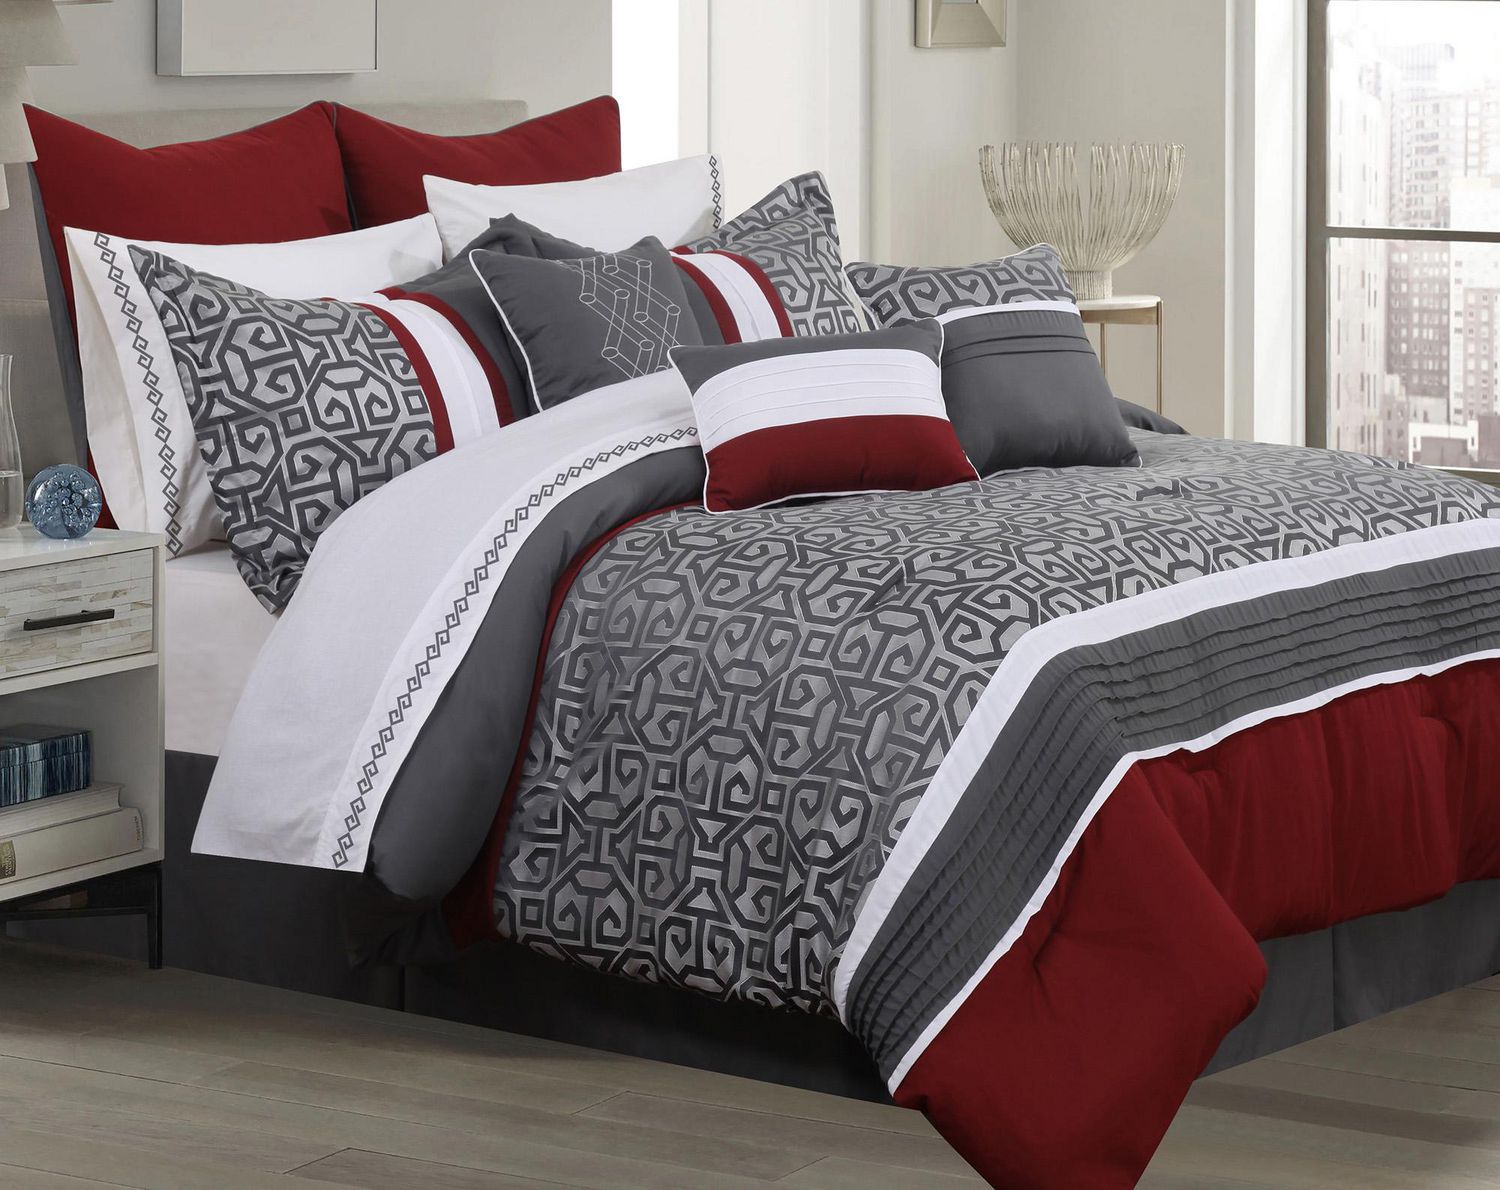 Safdie & Co. Comforter Set 7PC Q Sumatra Charcoal | Walmart Canada